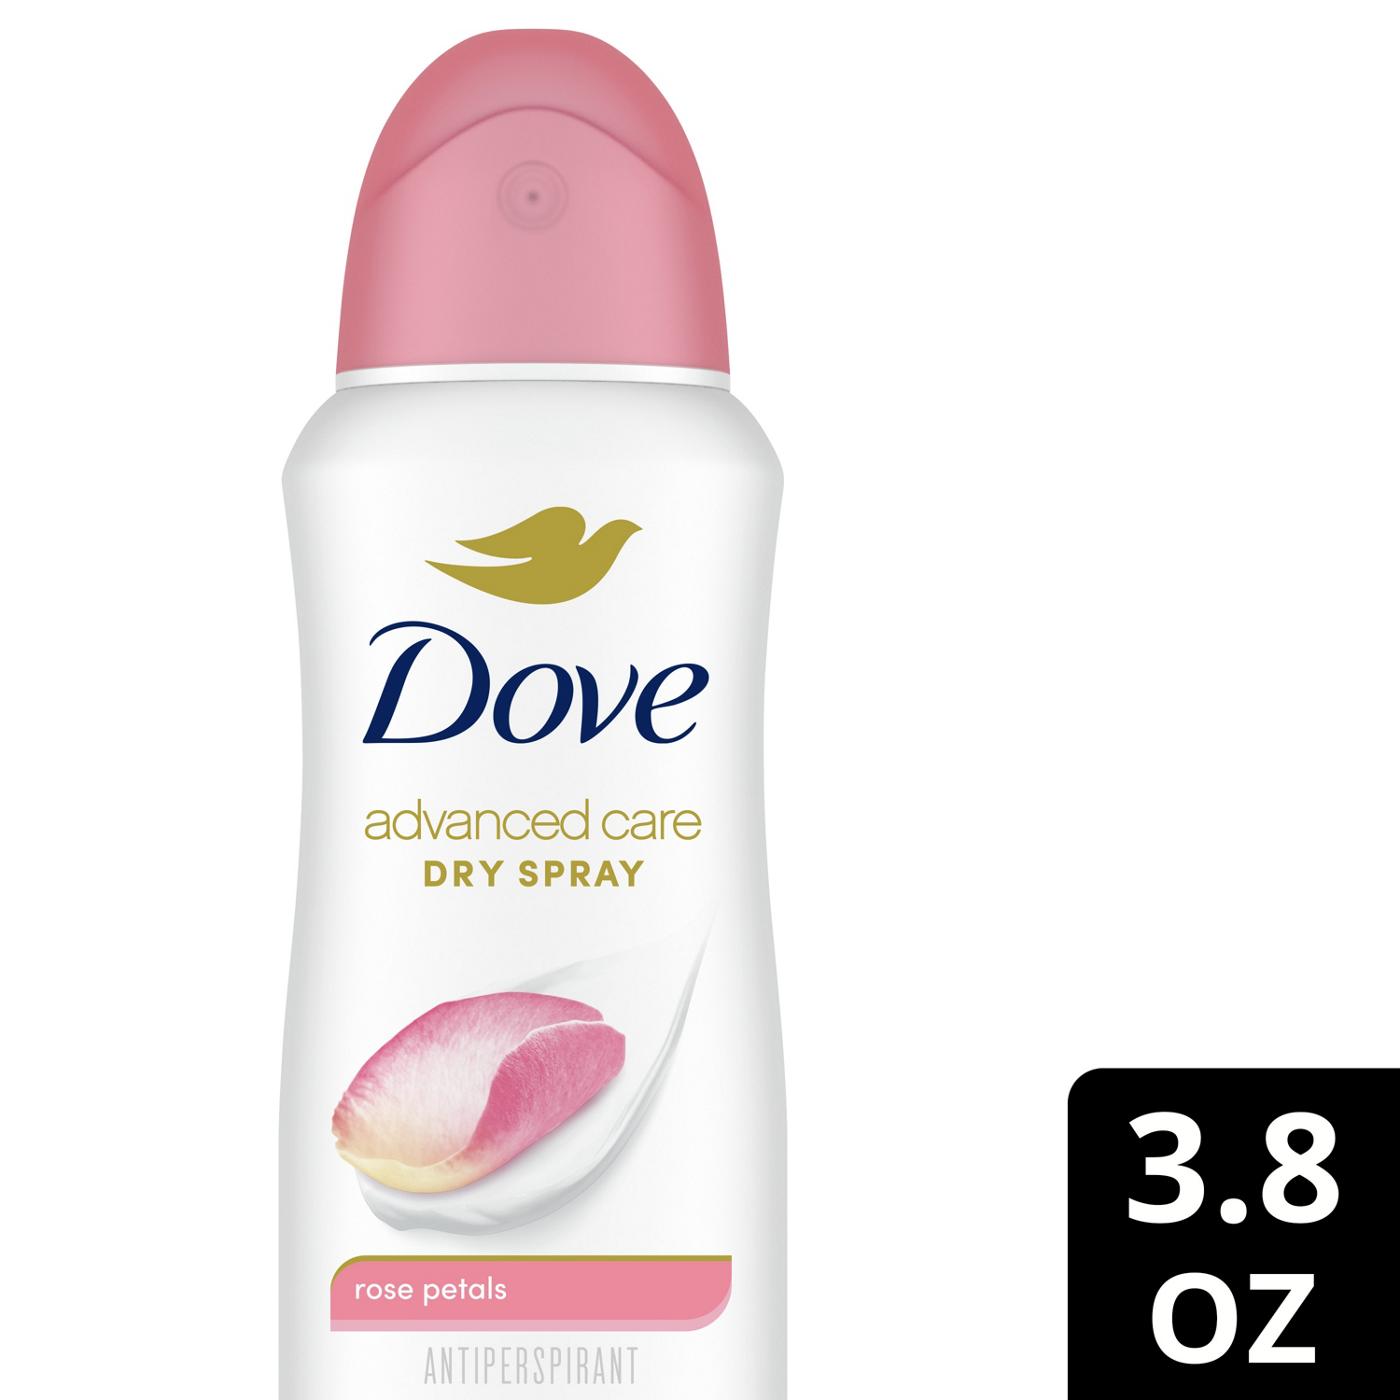 Dove Advanced Care Dry Spray Antiperspirant Deodorant Rose Petals; image 2 of 9